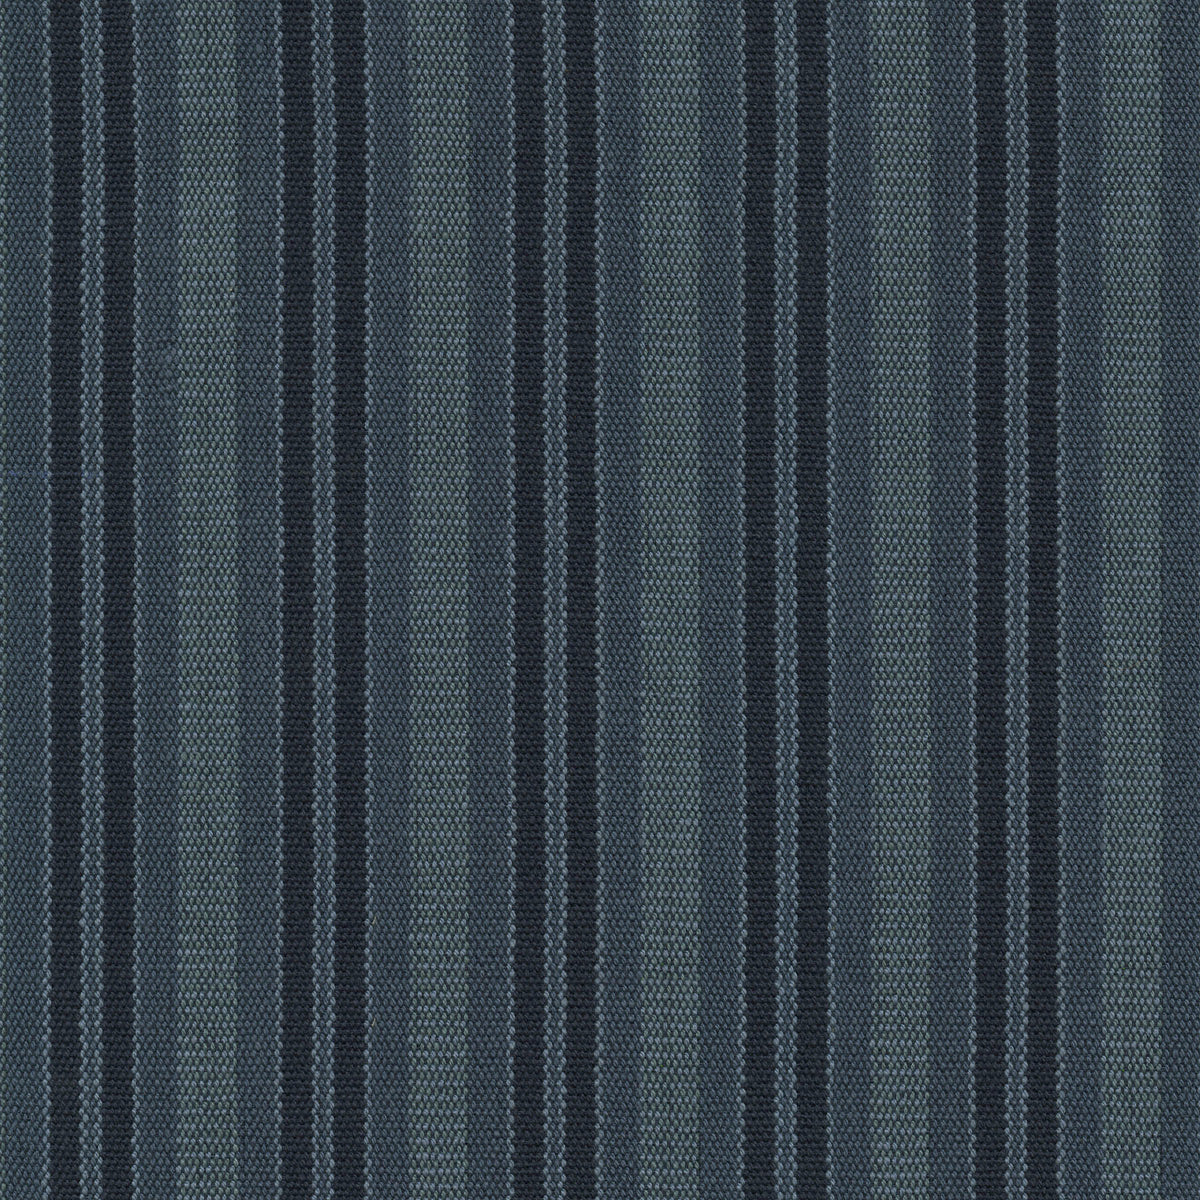 P/K Lifestyles Silverton Stripe - Indigo 411690 Upholstery Fabric